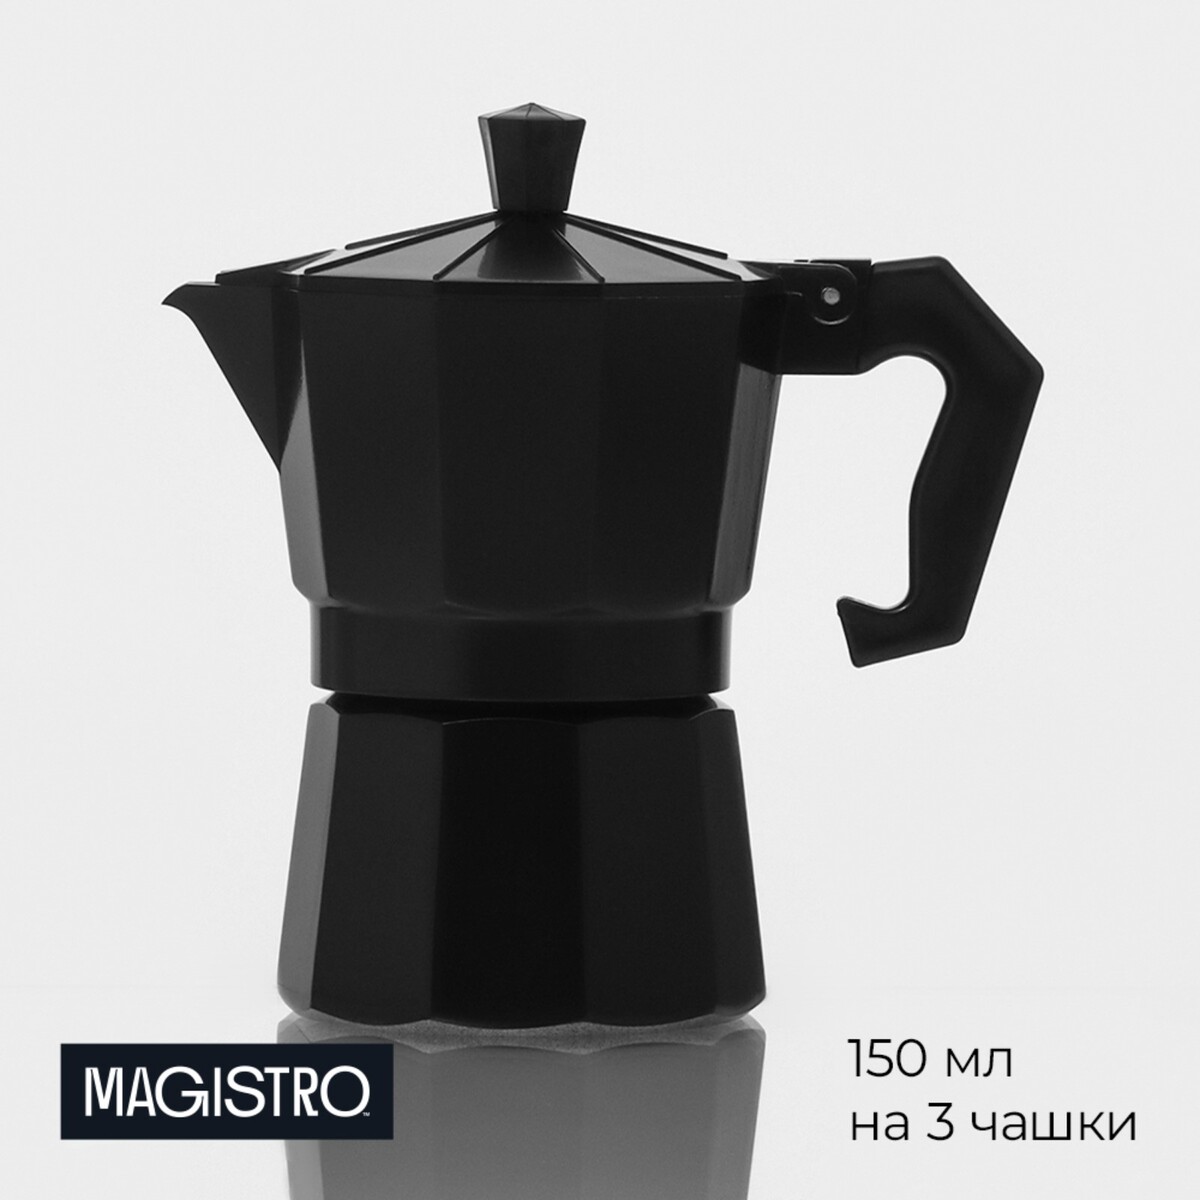 Кофеварка гейзерная magistro alum black, на 3 чашки, 150 мл кофеварка гейзерная magistro alum black на 3 чашки 150 мл